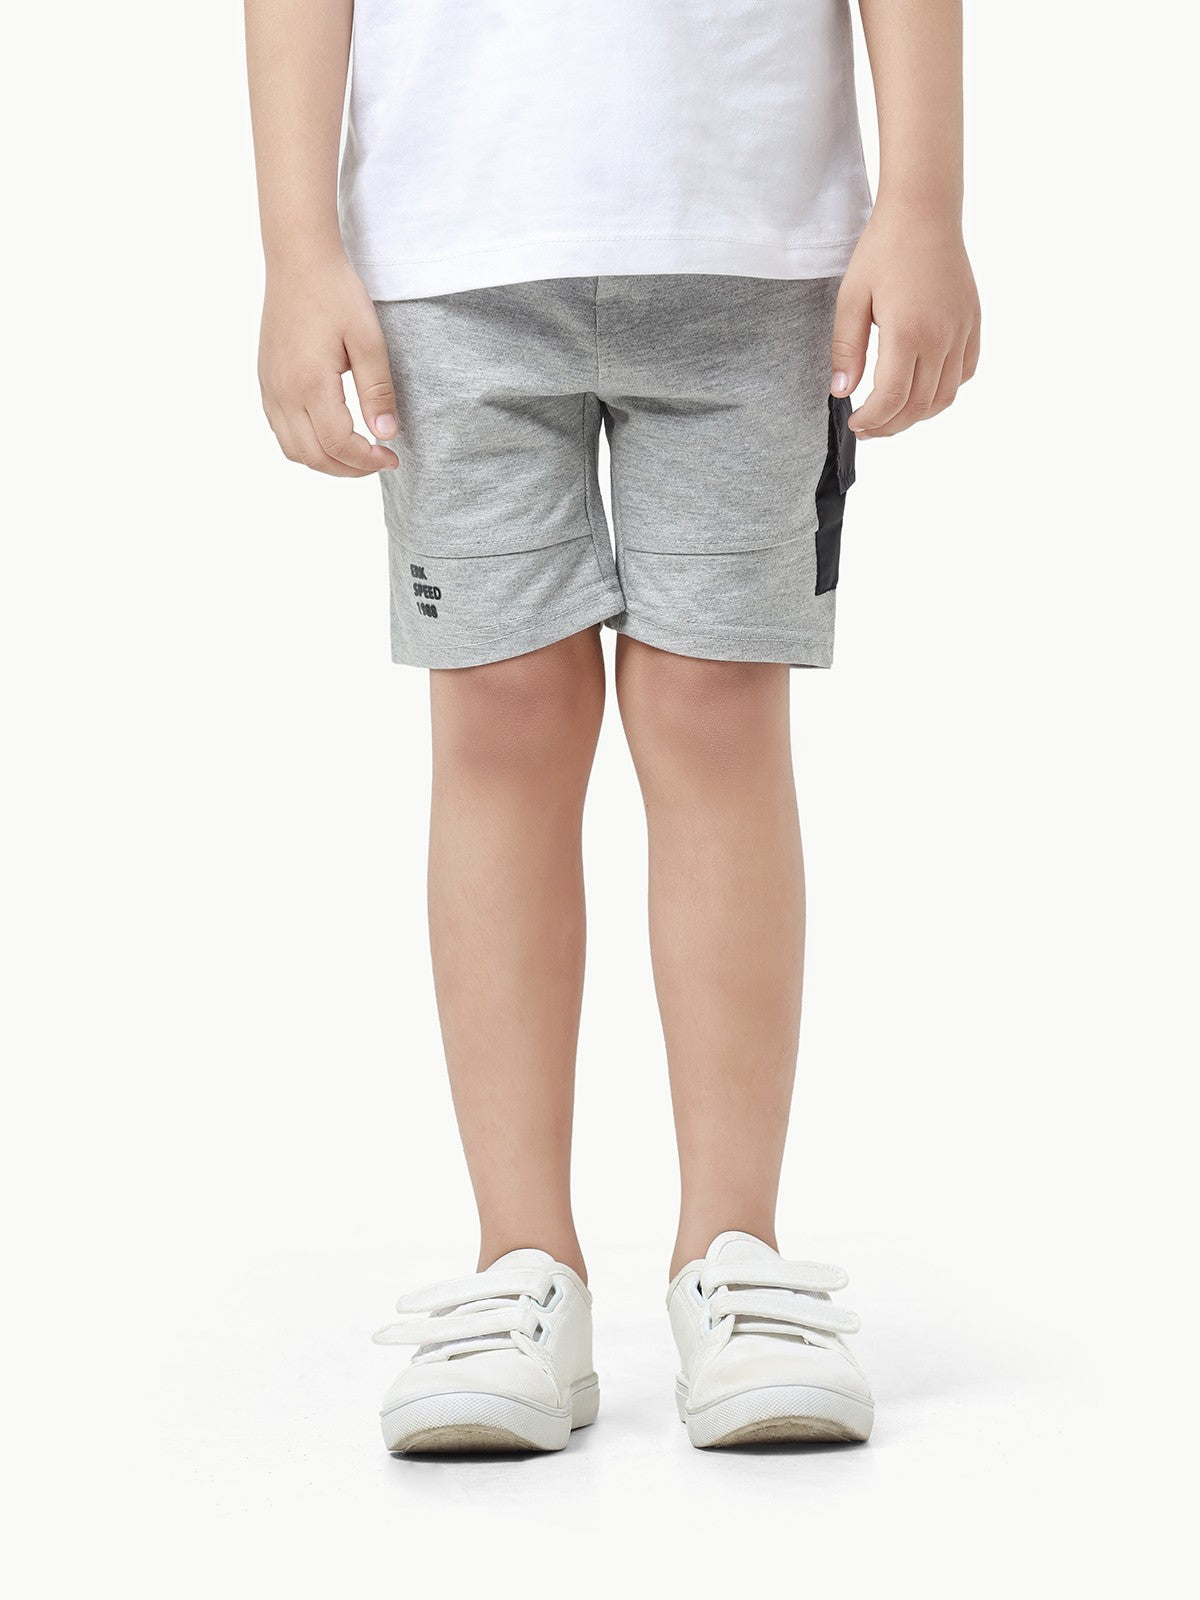 Boy's Light Grey Shorts - EBBSK23-019